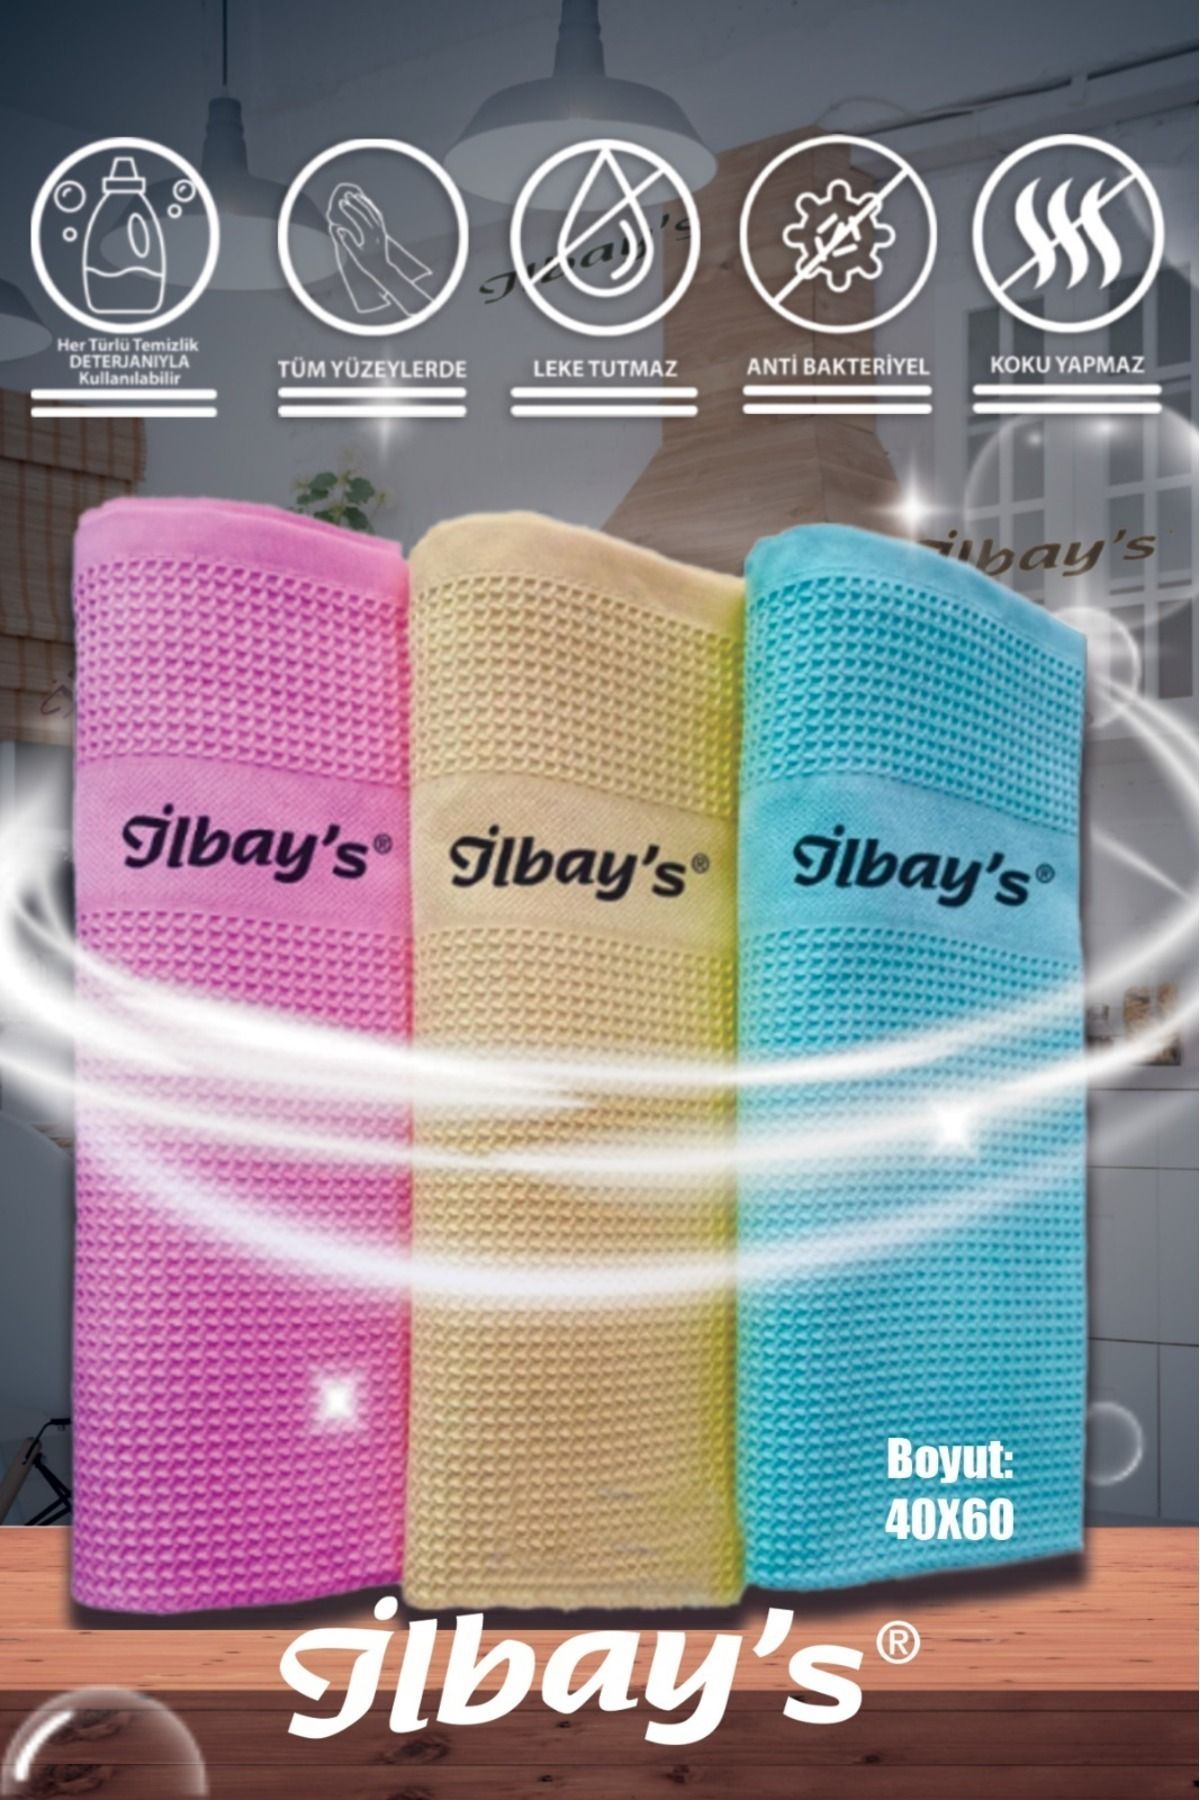 İlbay's Ithal Fabrika Satış Mağazası Orijinal Mikrofiber Temizlik Bezi (40X60)